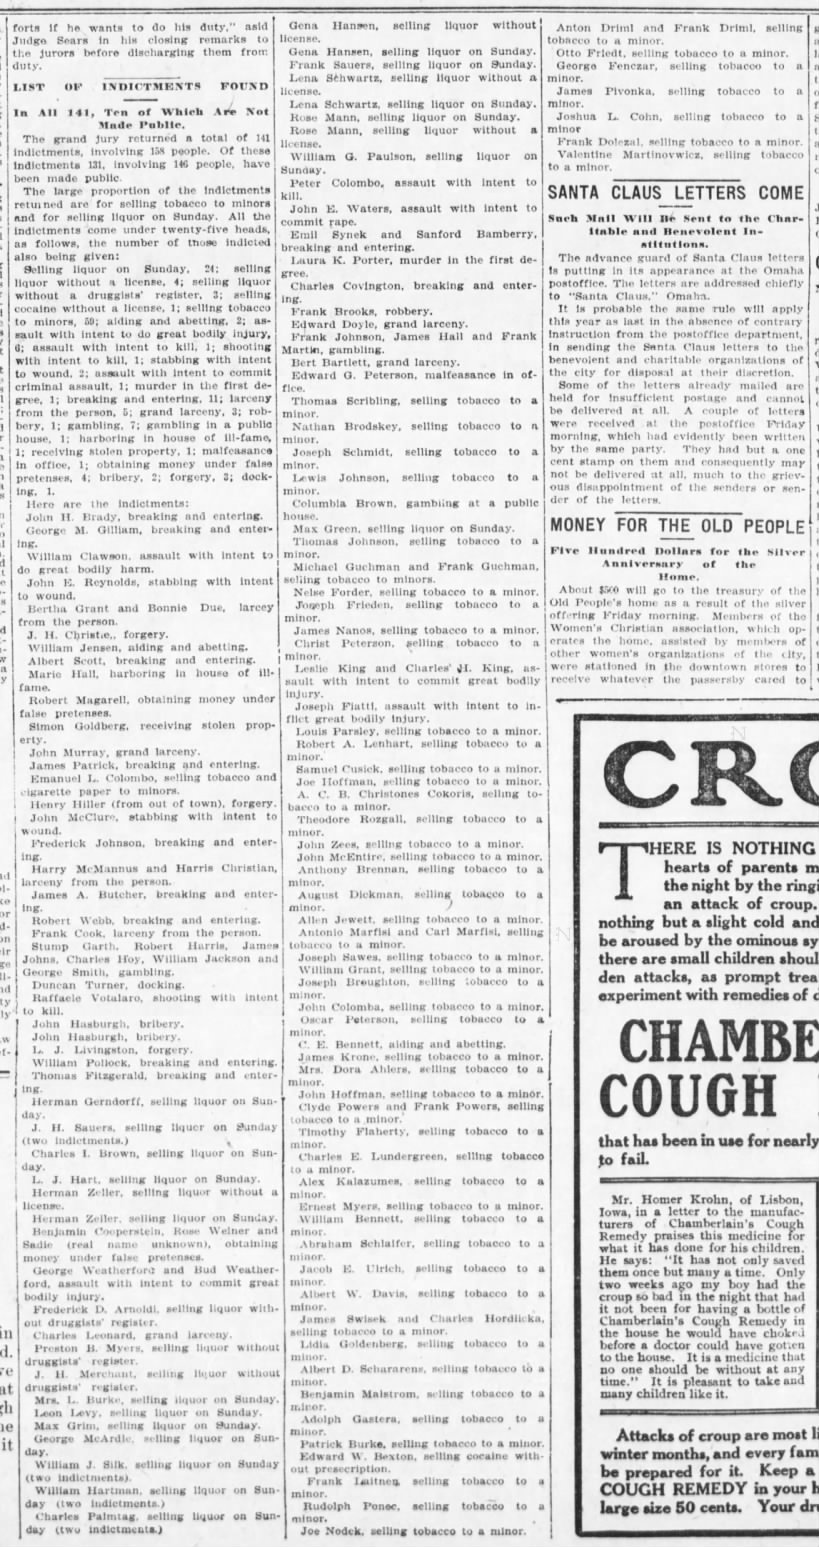 List of Indictments found, Omaha Daily Bee (Omaha, Nebraska) December 5, 1908, page 8